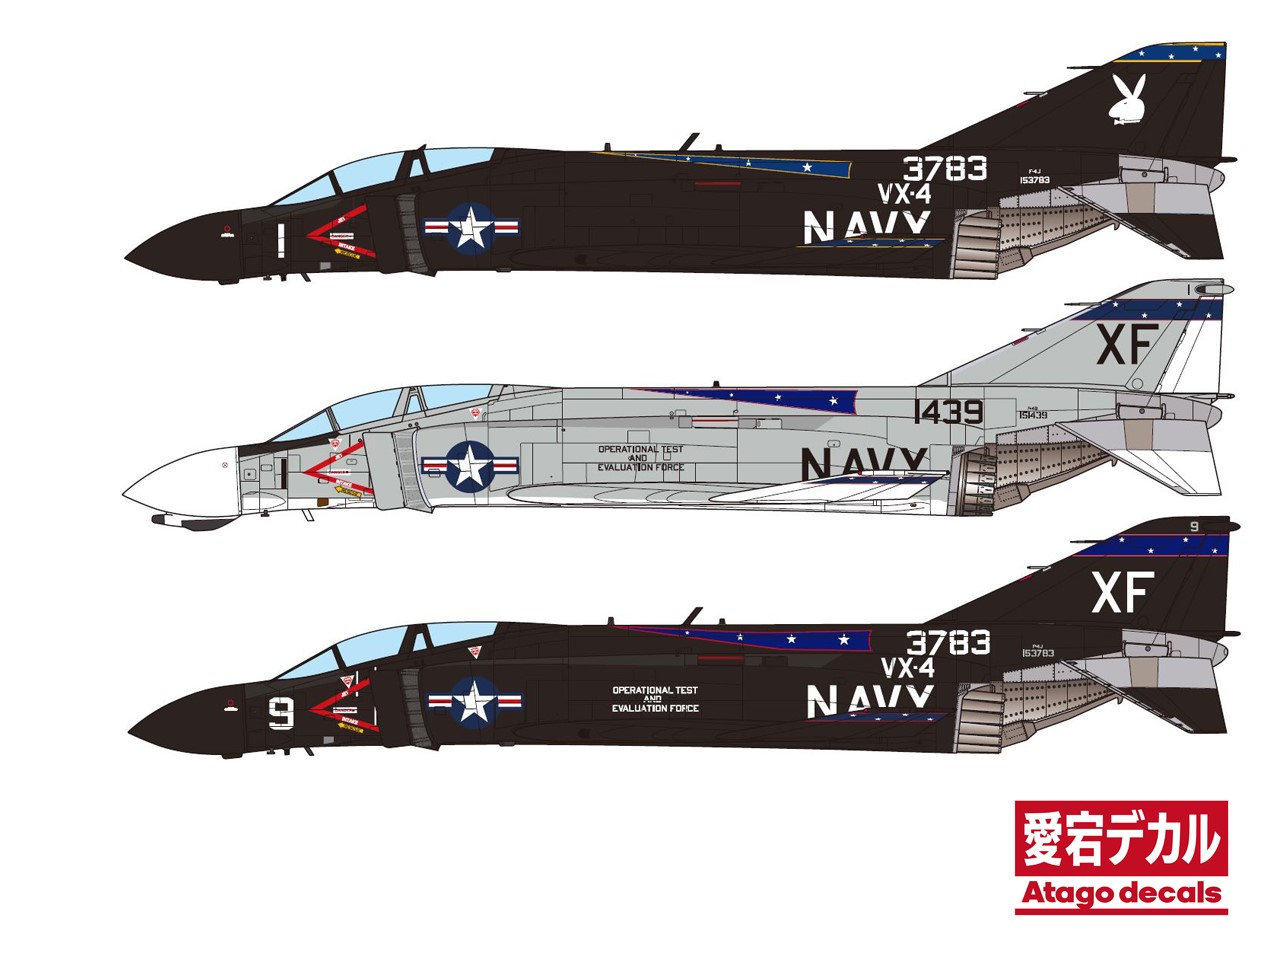 1/48 F-4 Phantom II “VX-4 Evaluators” F-4B ＆ F-4J / Atago decals 